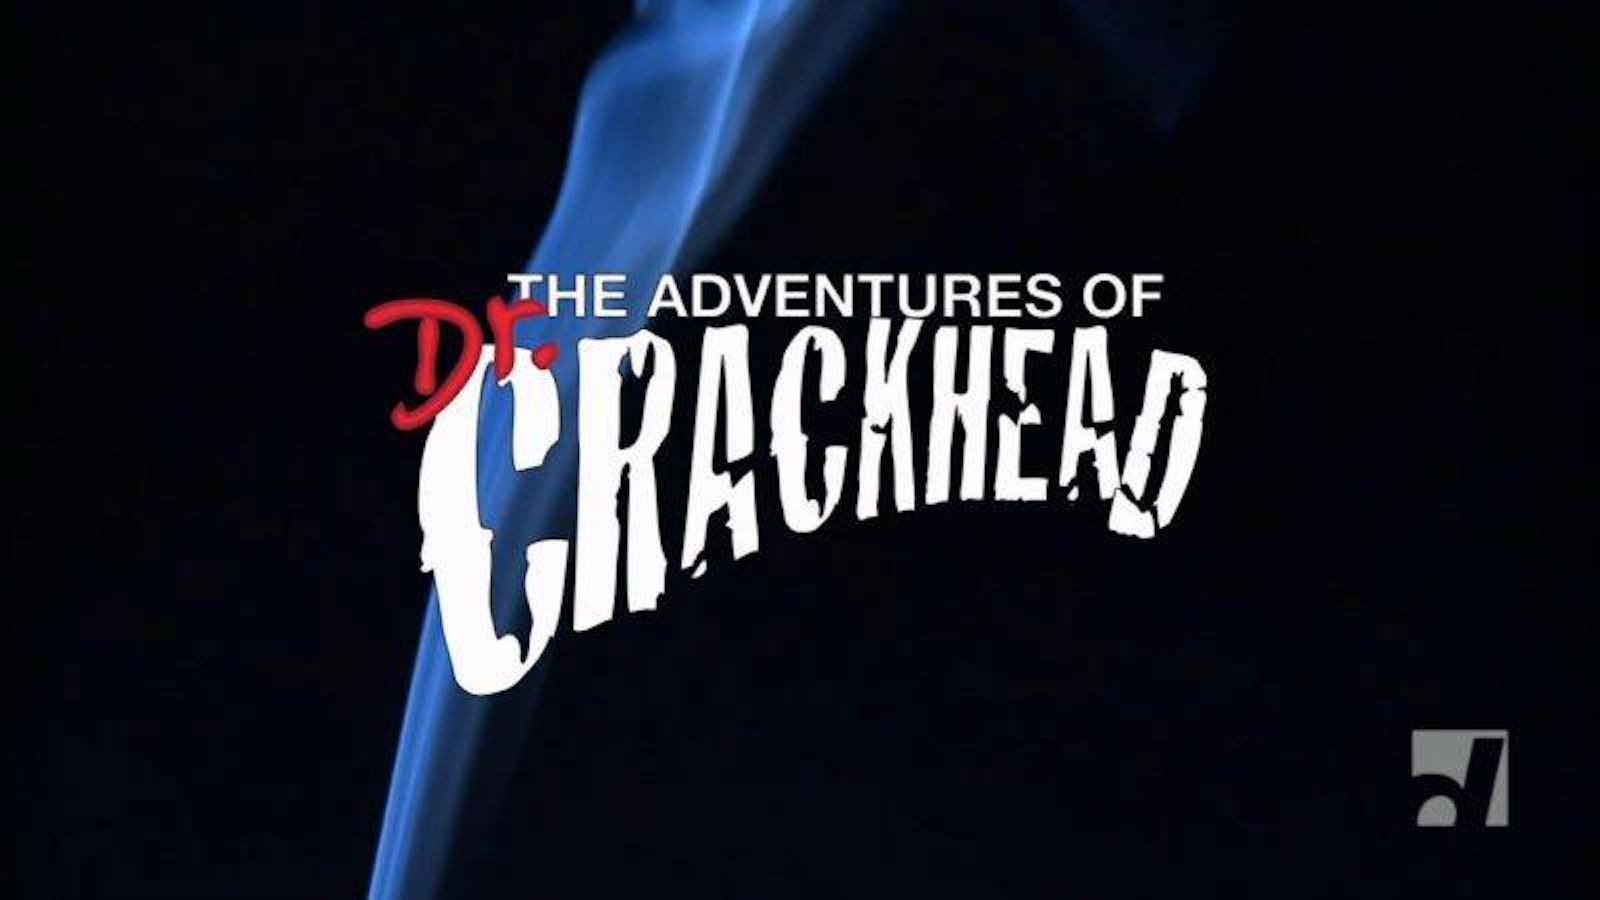 The Adventures of Dr. Crackhead (2013) starring David Berner on DVD on DVD